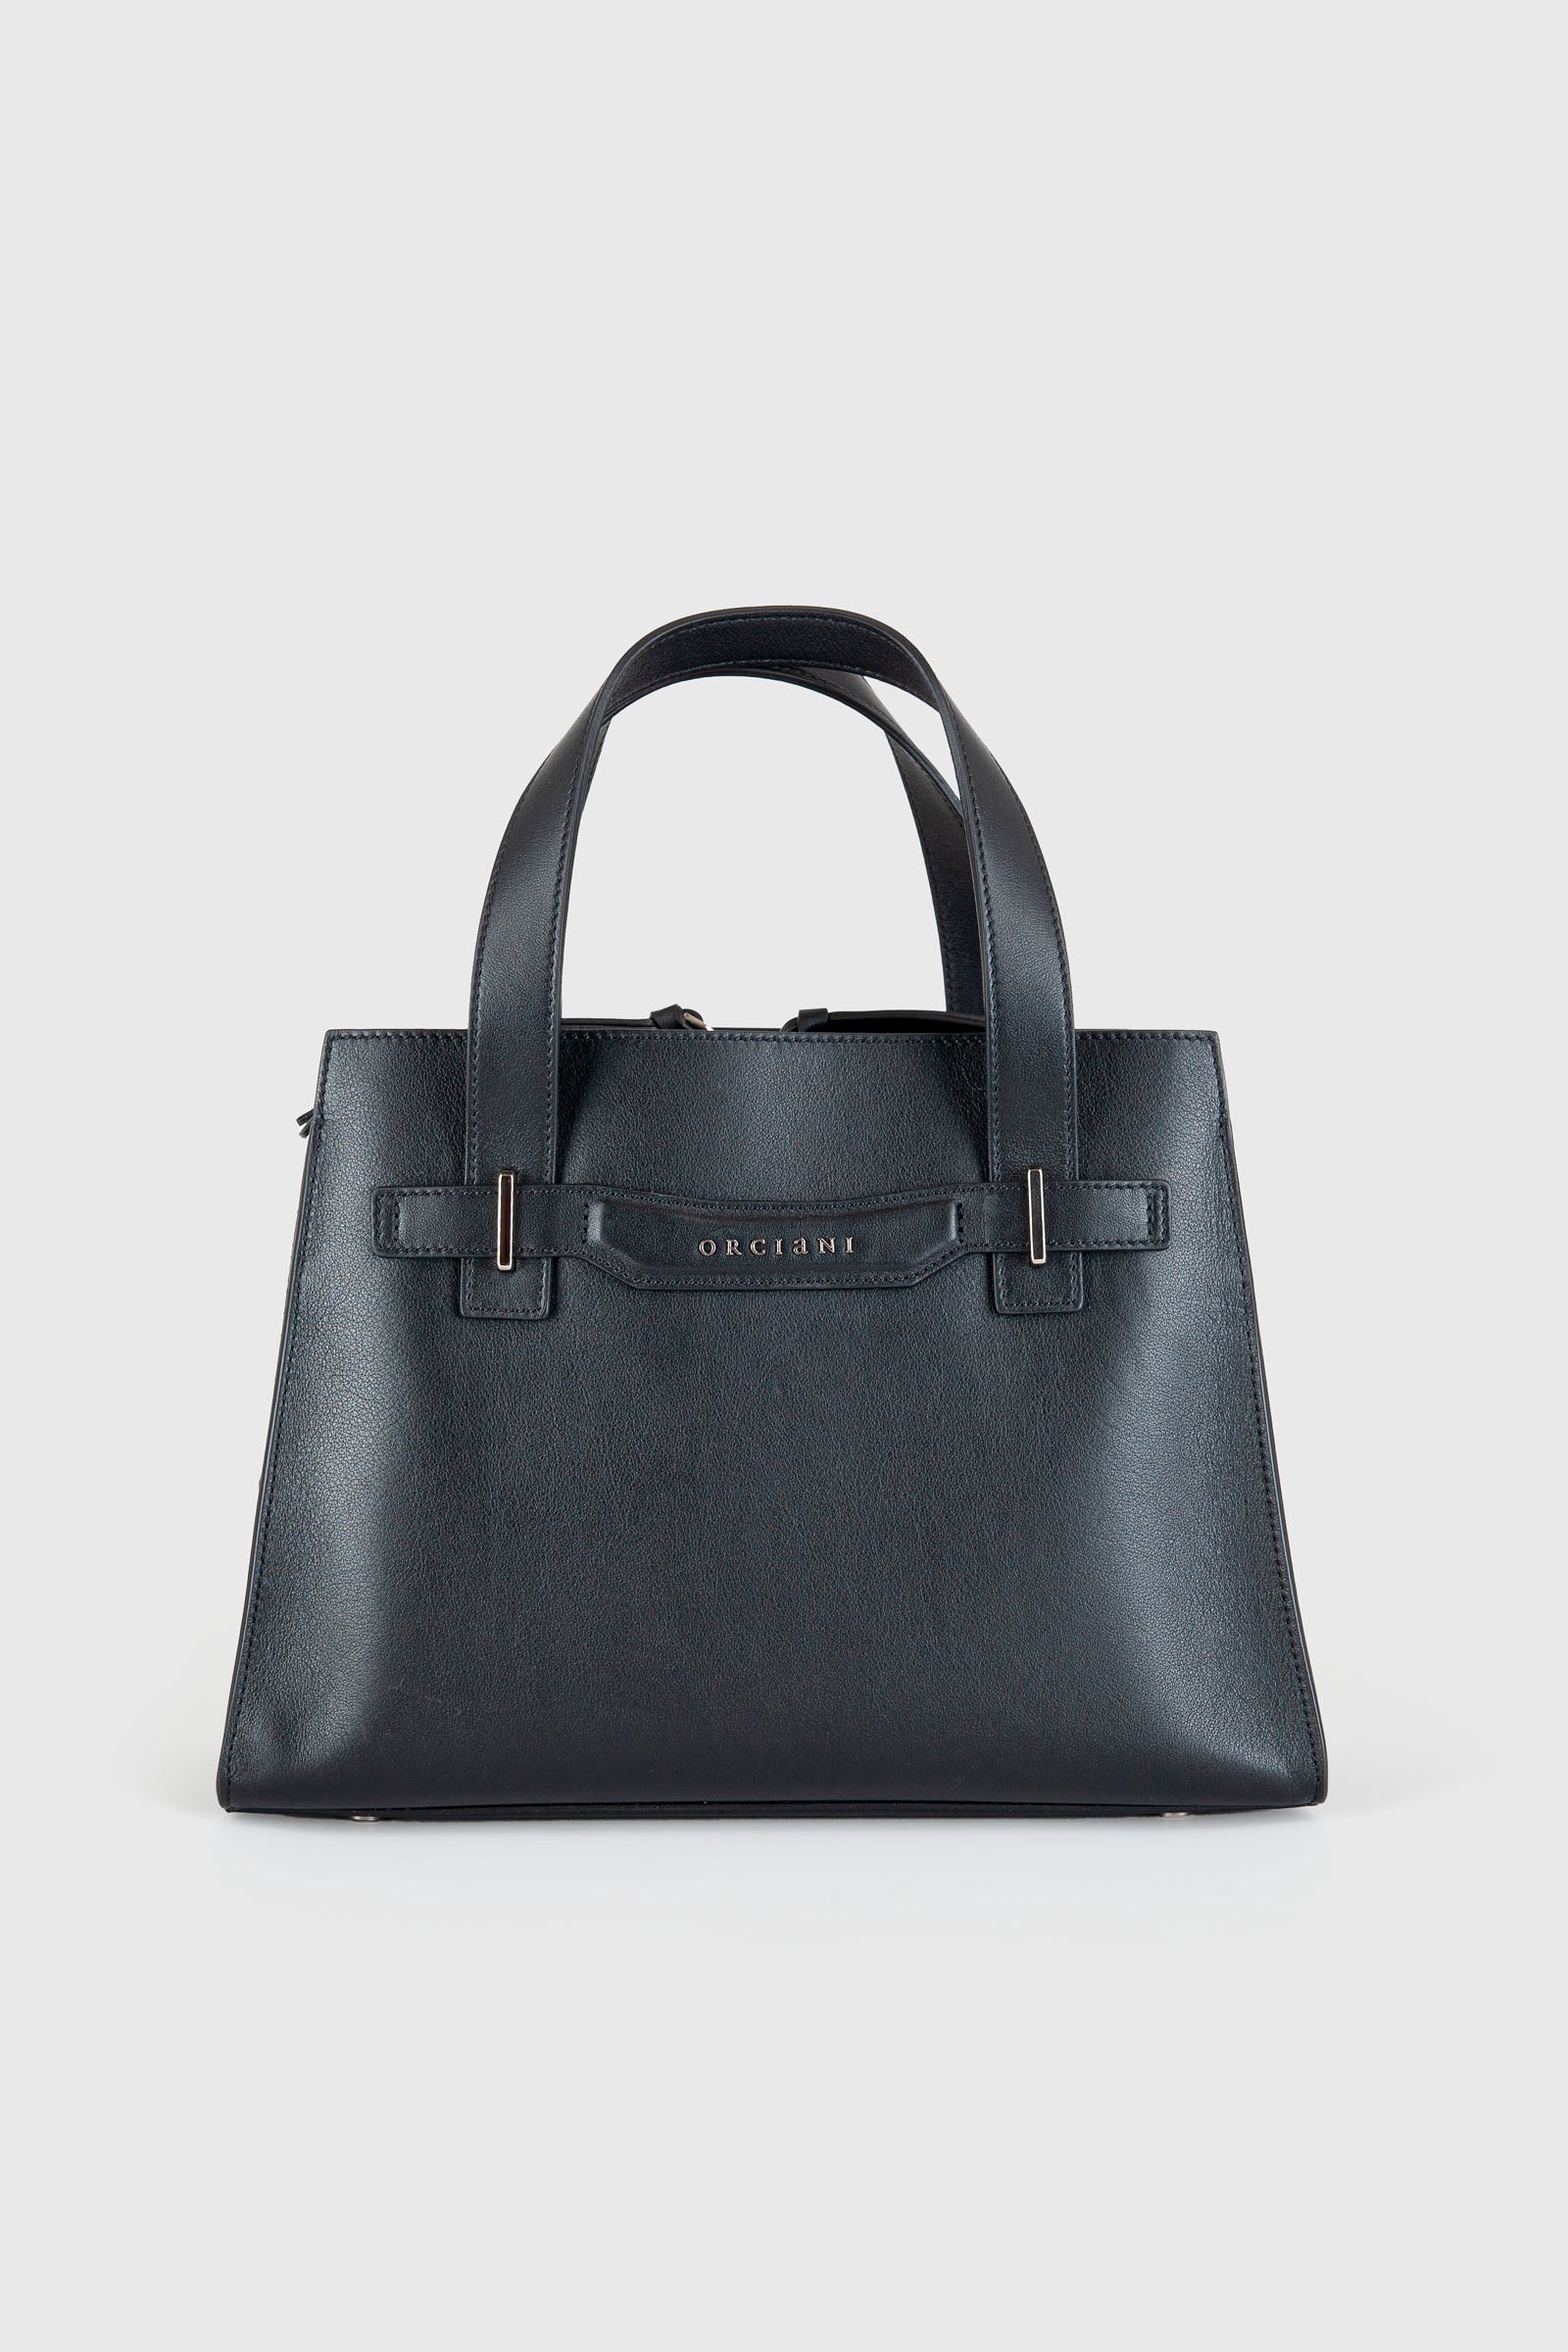 Orciani Leather Bag Black Out Black Woman B02147BLACK - 1